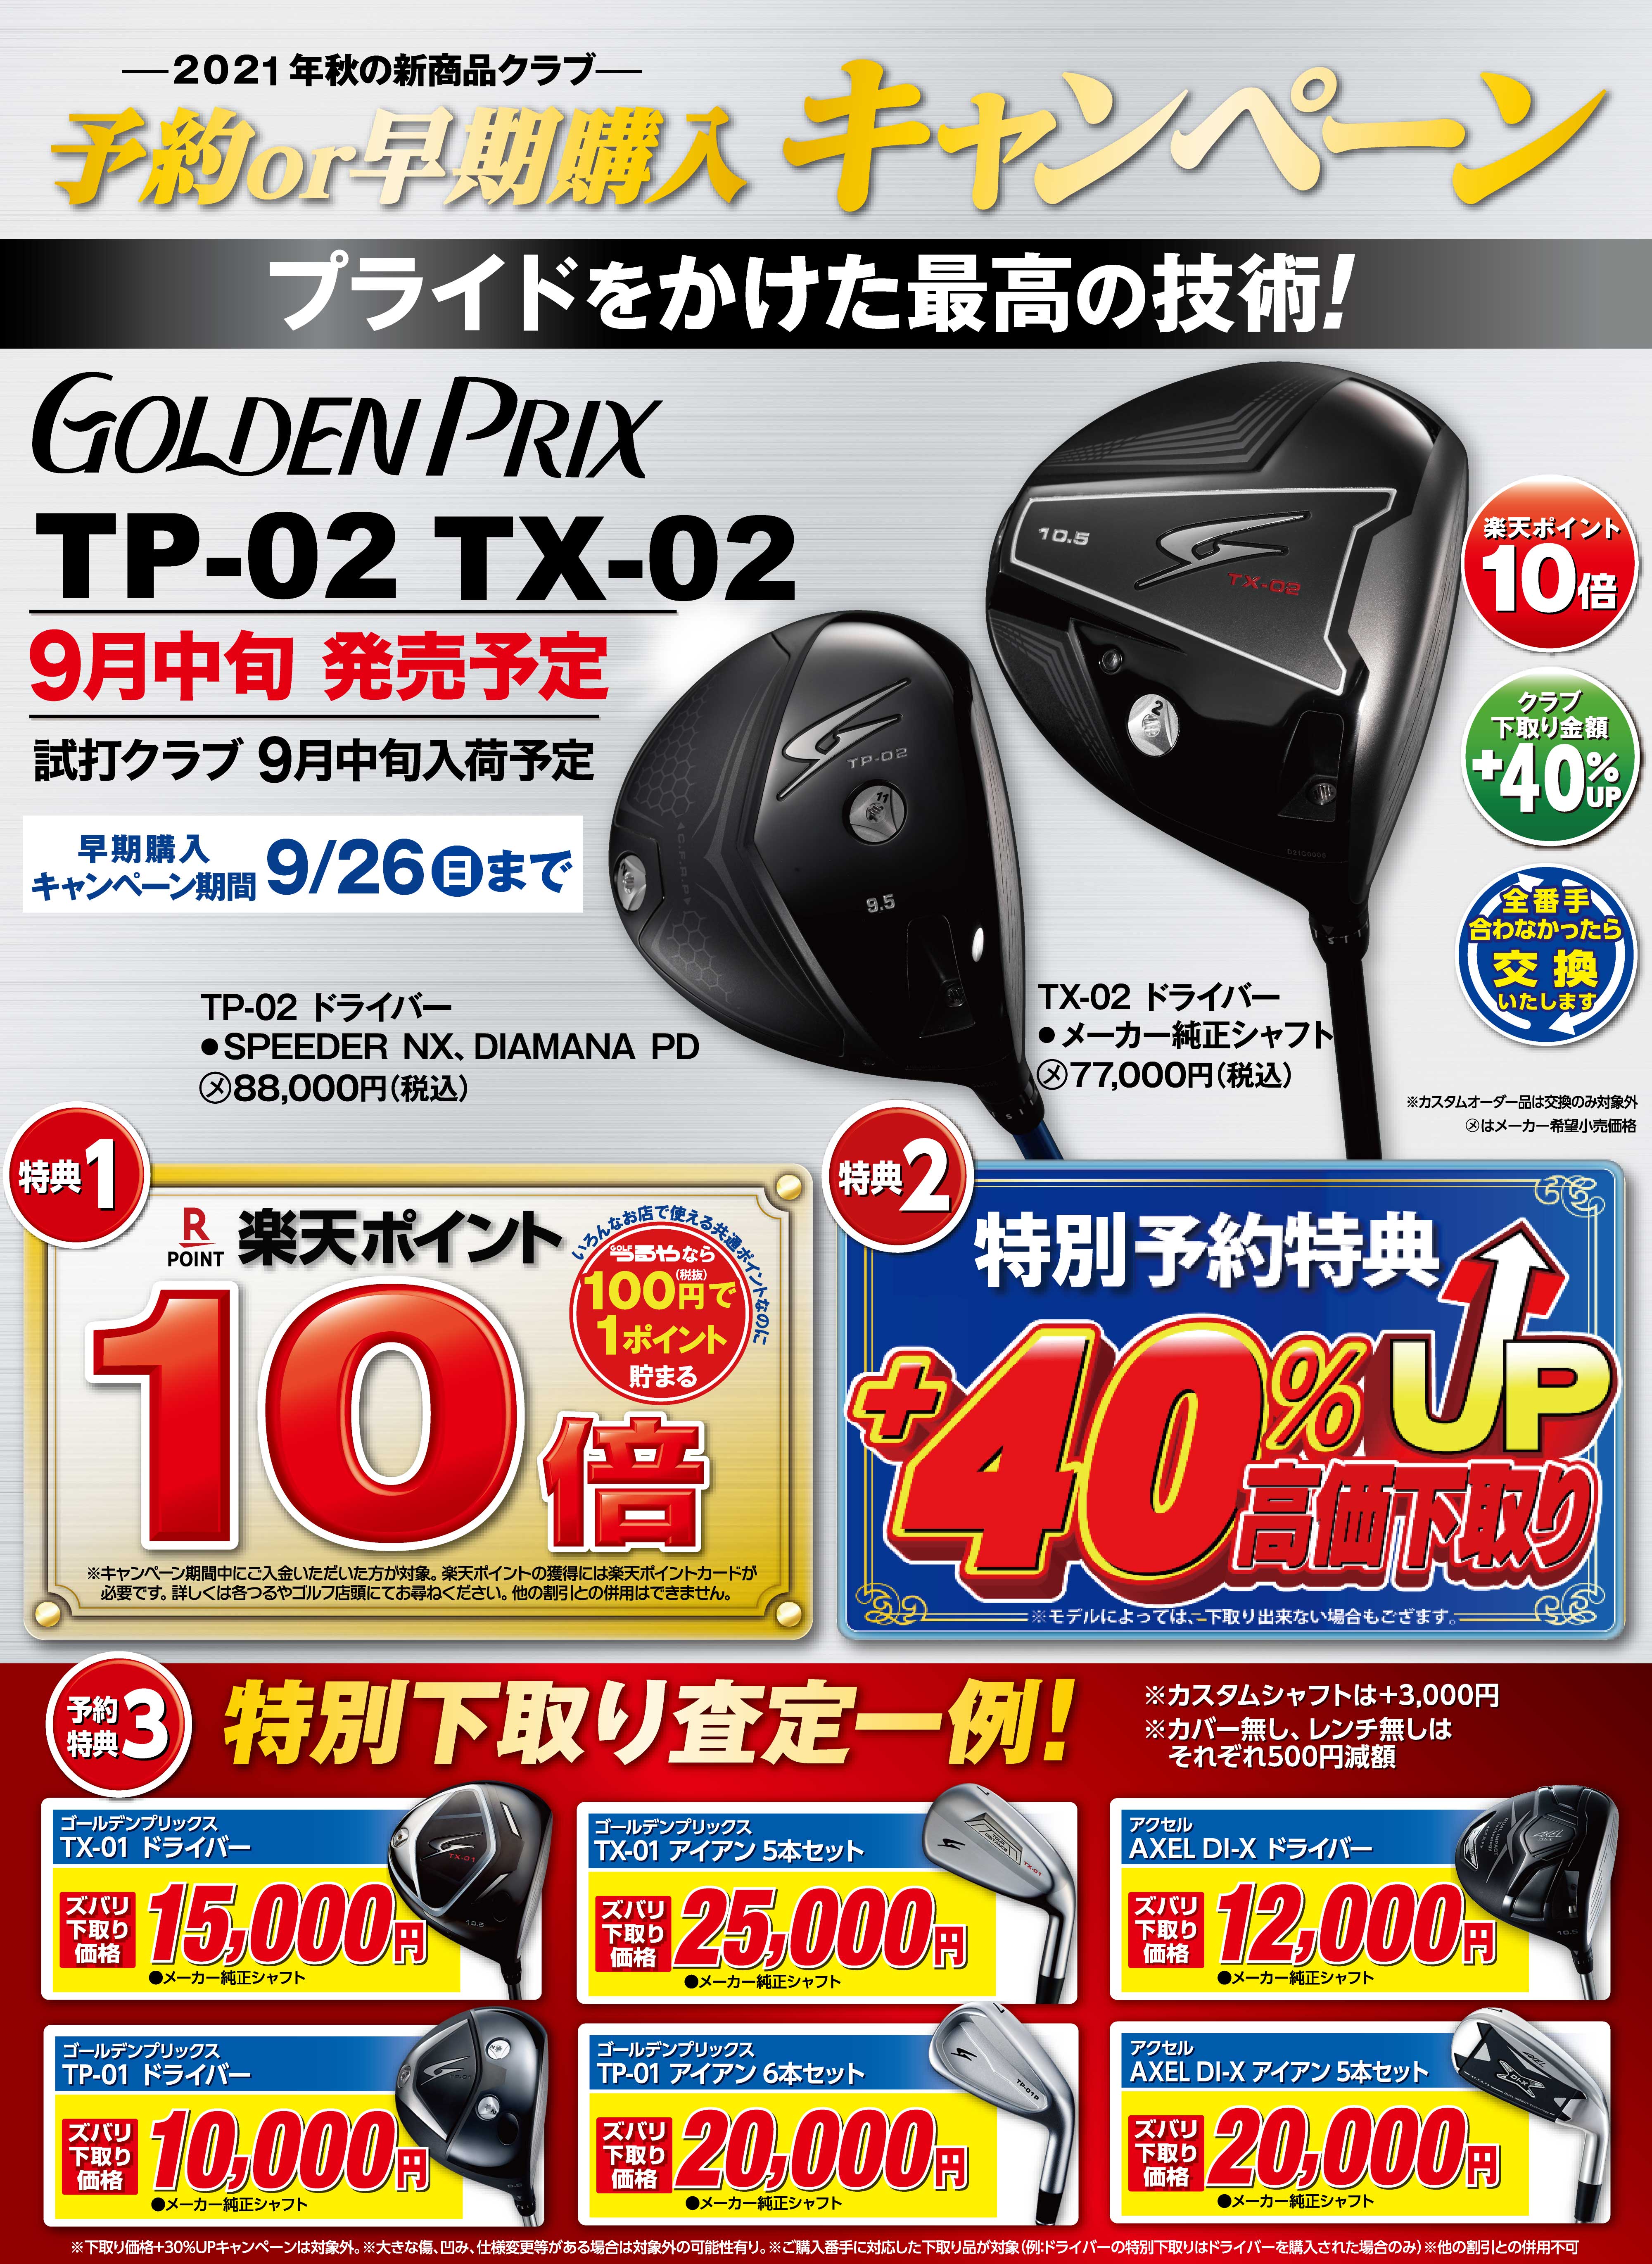 GOLDEN PRIX TP-02 TX-02 予約購入キャンペーン開催中 